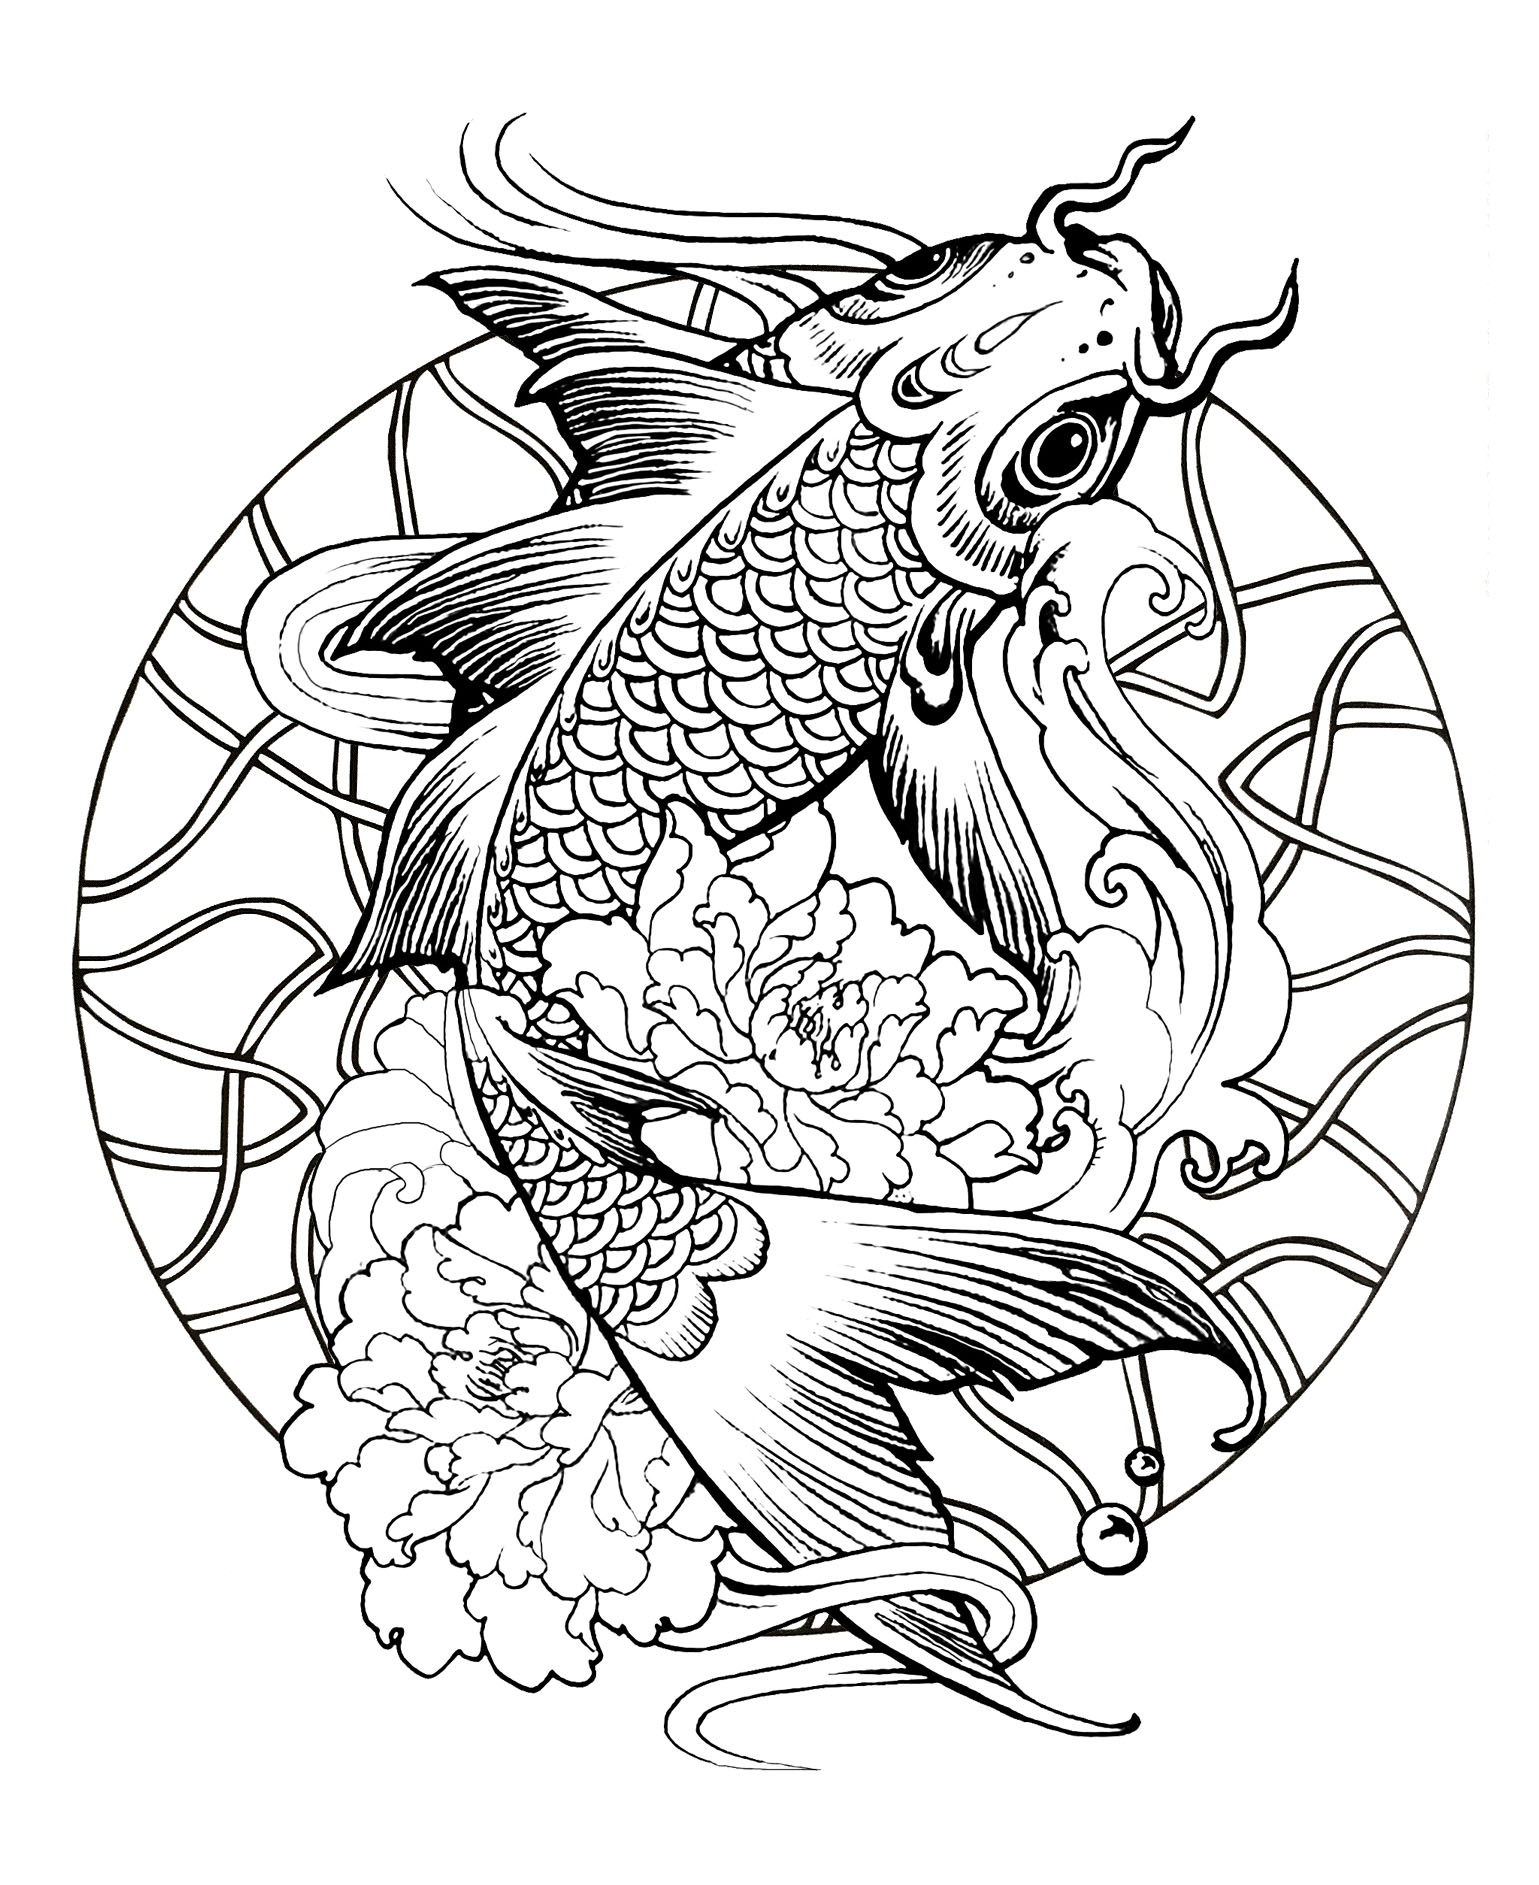 A simple Mandala with a giant fish (carp)